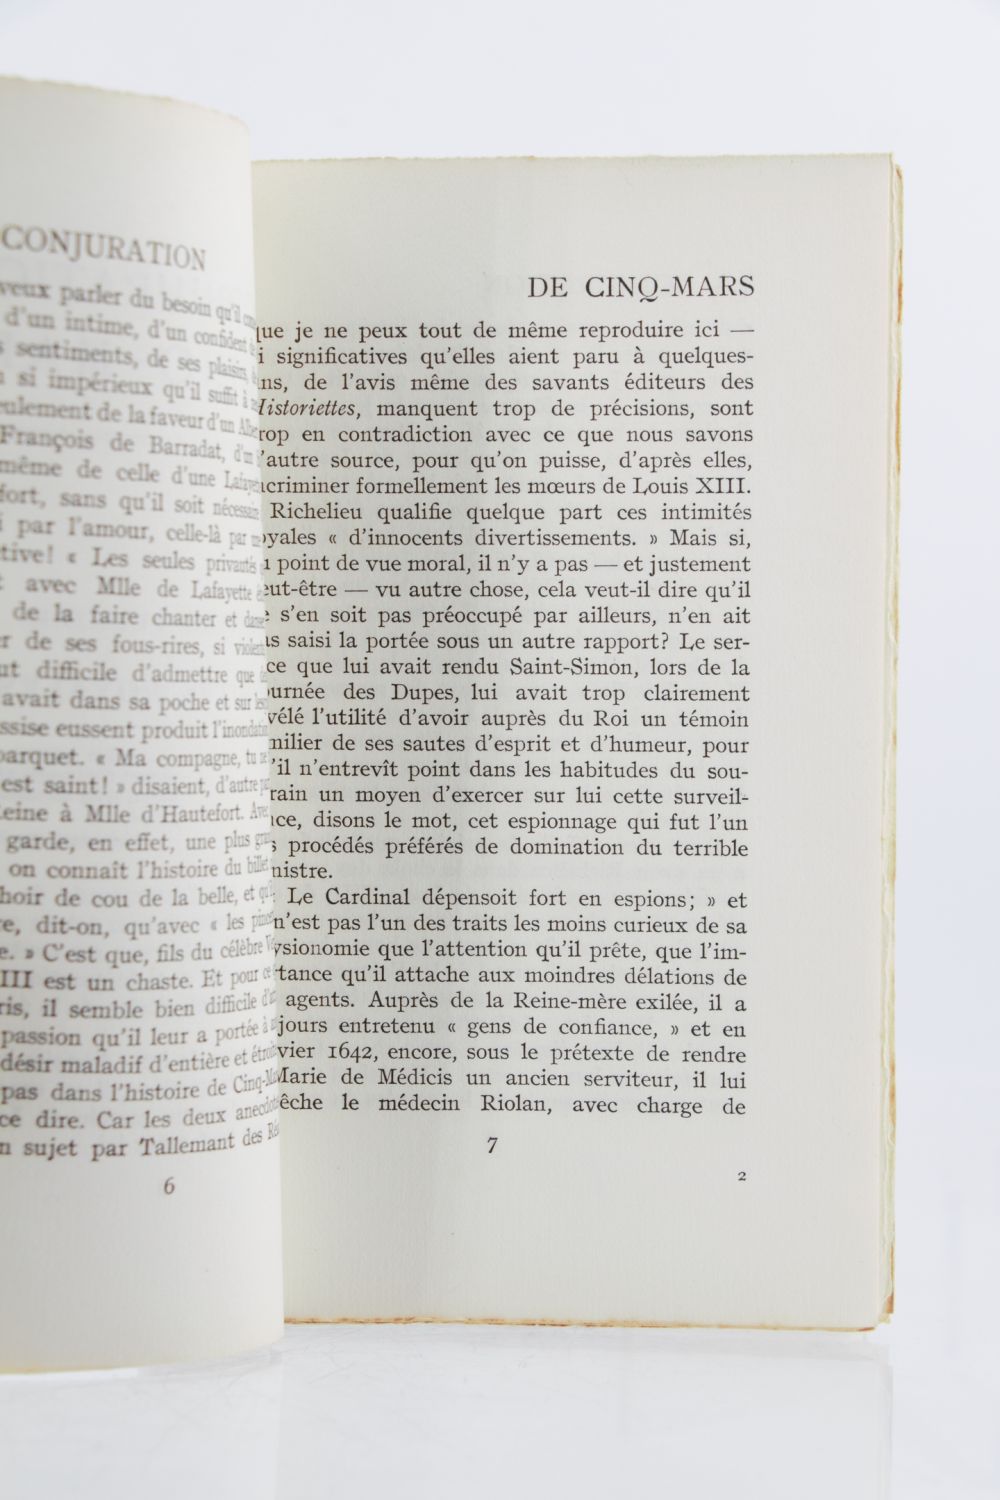 VAISSIERE : Conjuration de Cinq-Mars - First edition - Edition ...